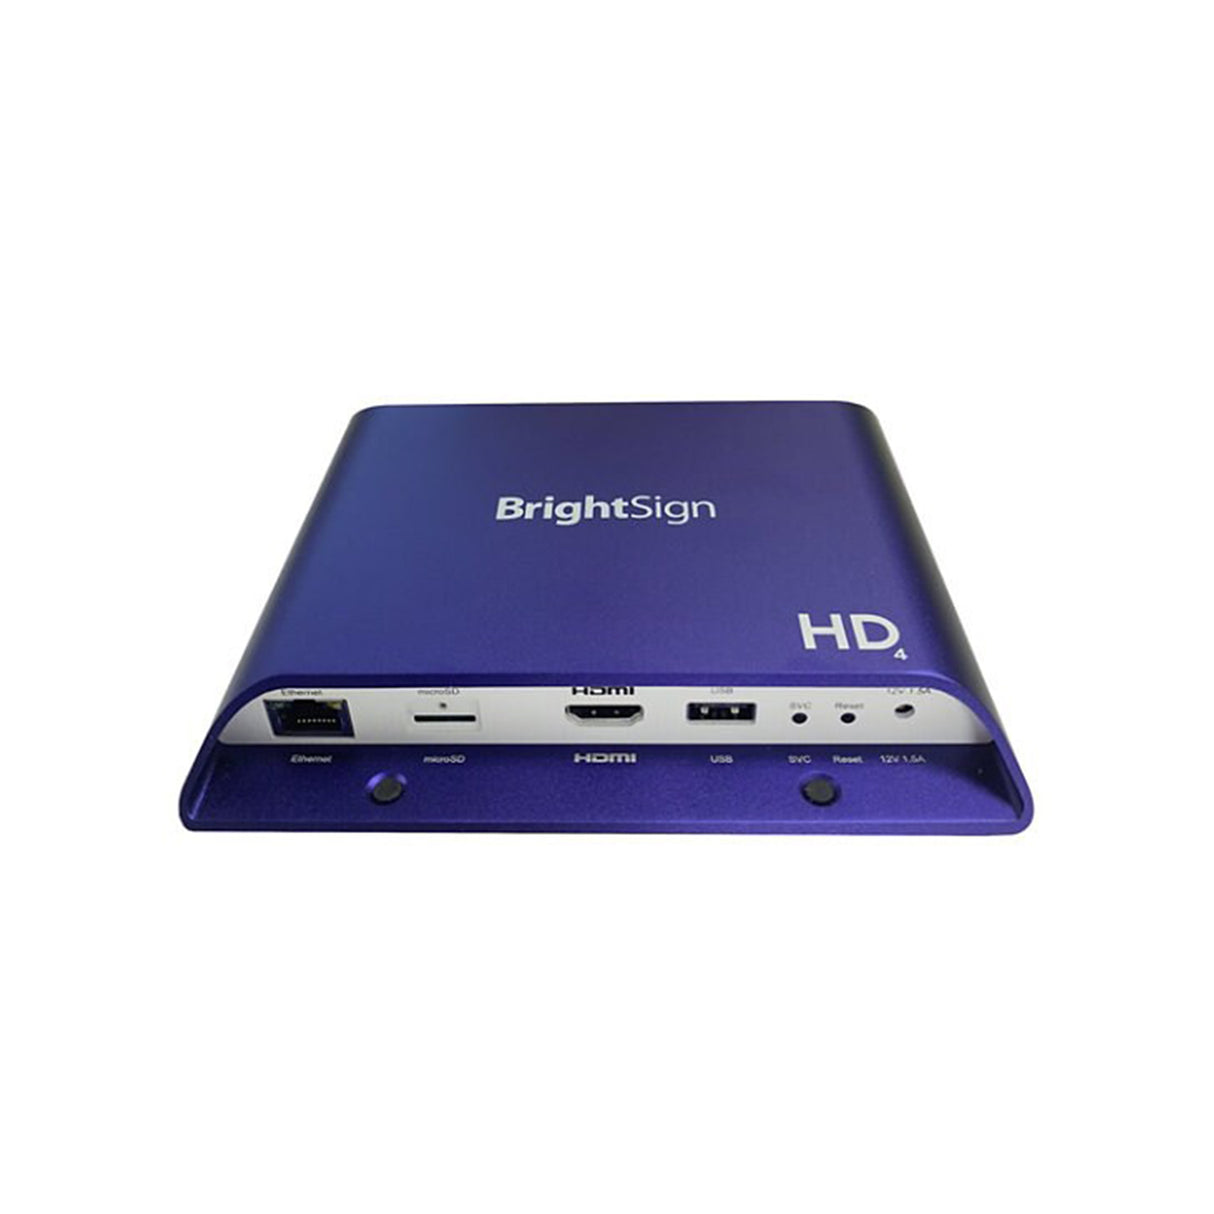 Brightsign Player HD1024